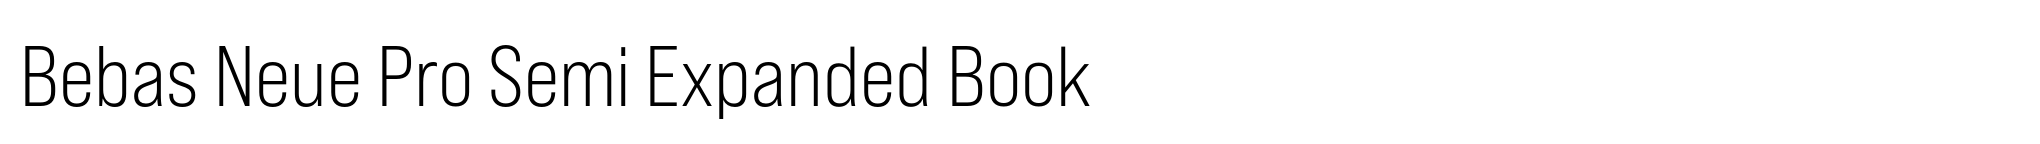 Bebas Neue Pro Semi Expanded Book image